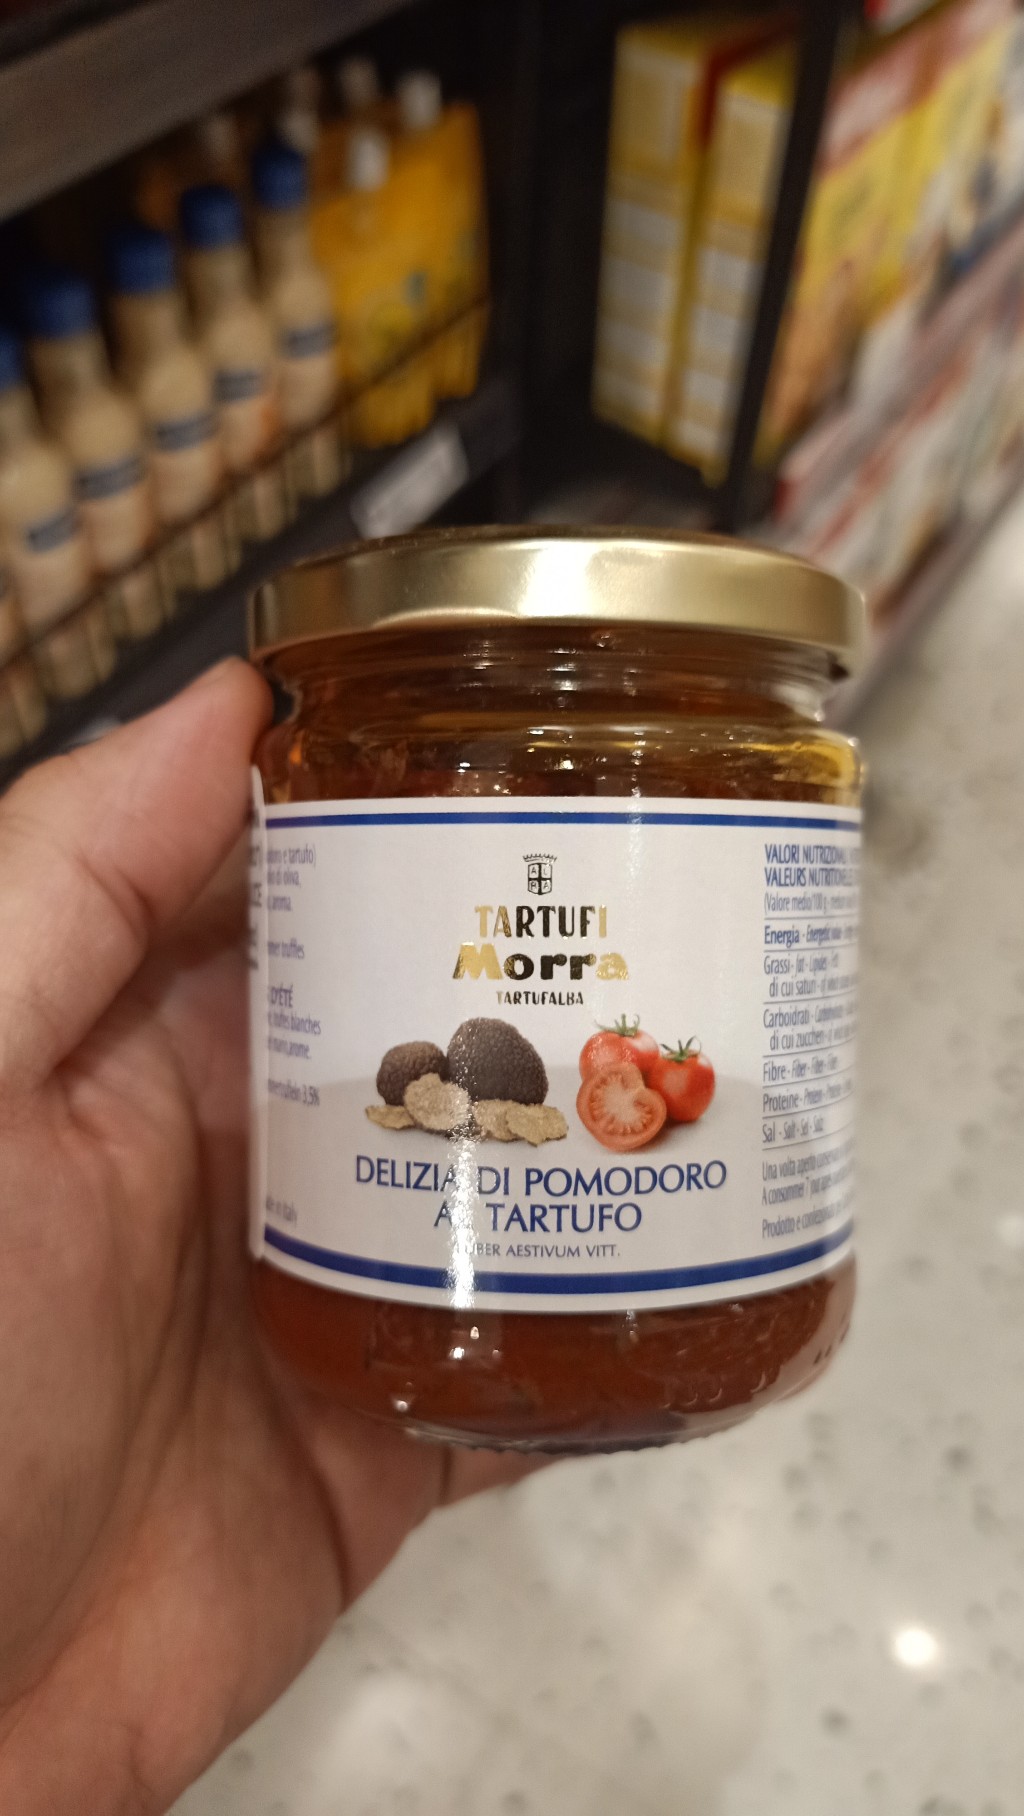 ecook อิตาลี ซอส ซอสมะเขือเทศ ผสม เห็ด ทรัฟเฟิล g tartufi morra tartufalba tomato and truffless sauce 180g